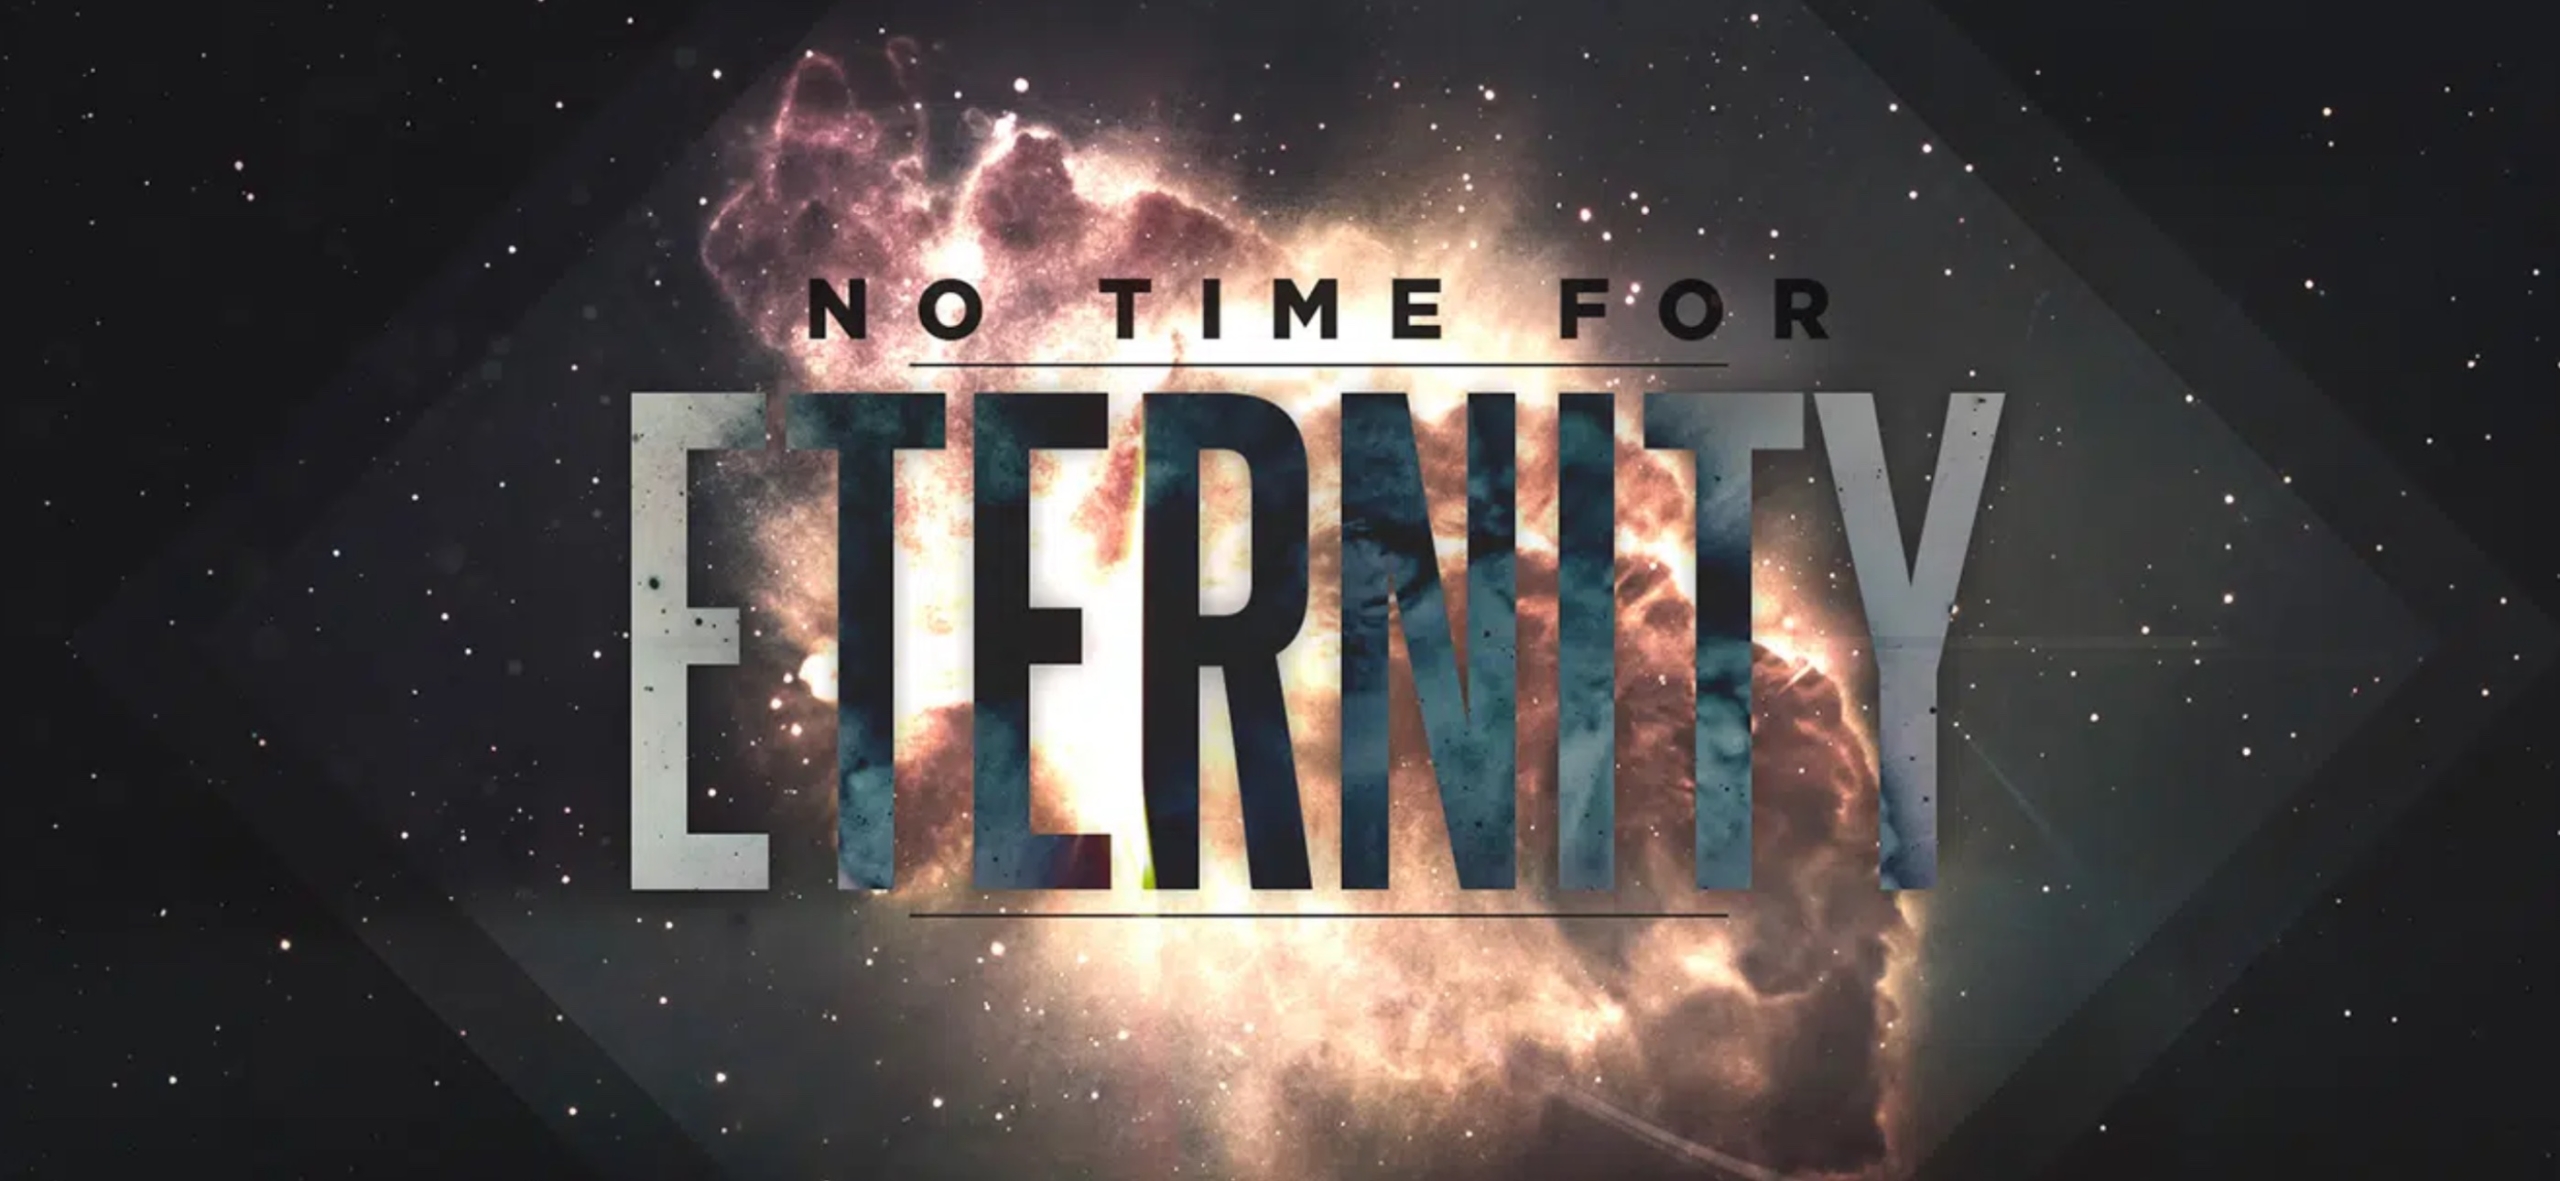 Eternity: The Return of Christ